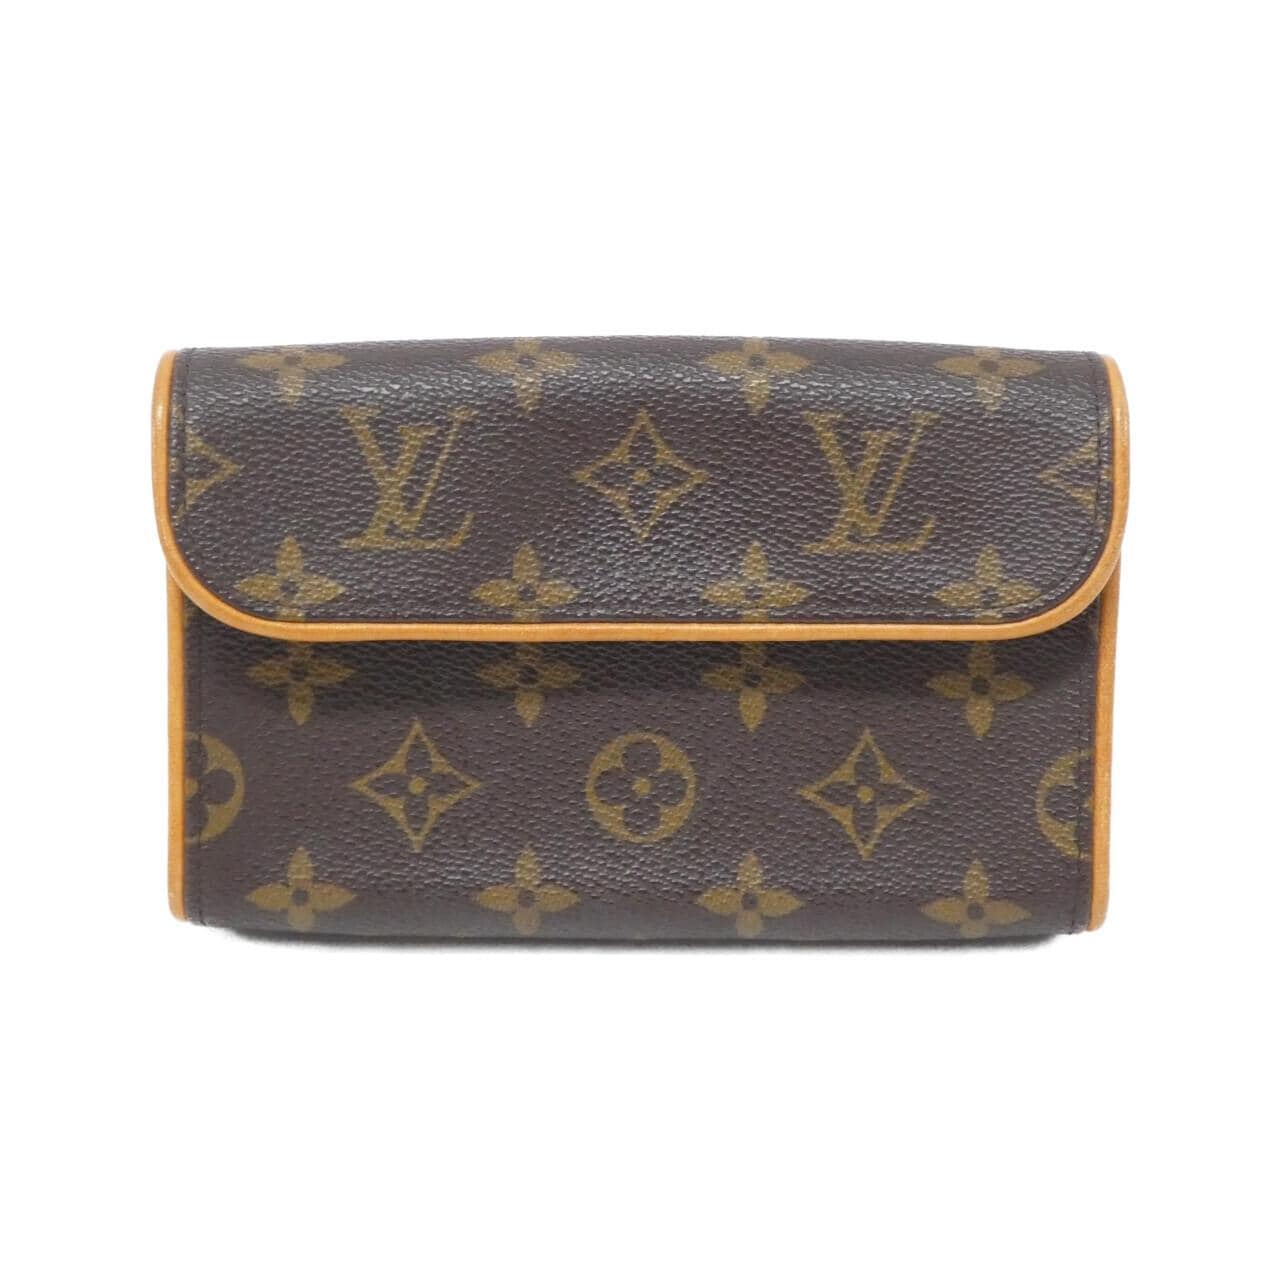 Louis Vuitton Monogram Pochette Florentine Belt Bag with Box at